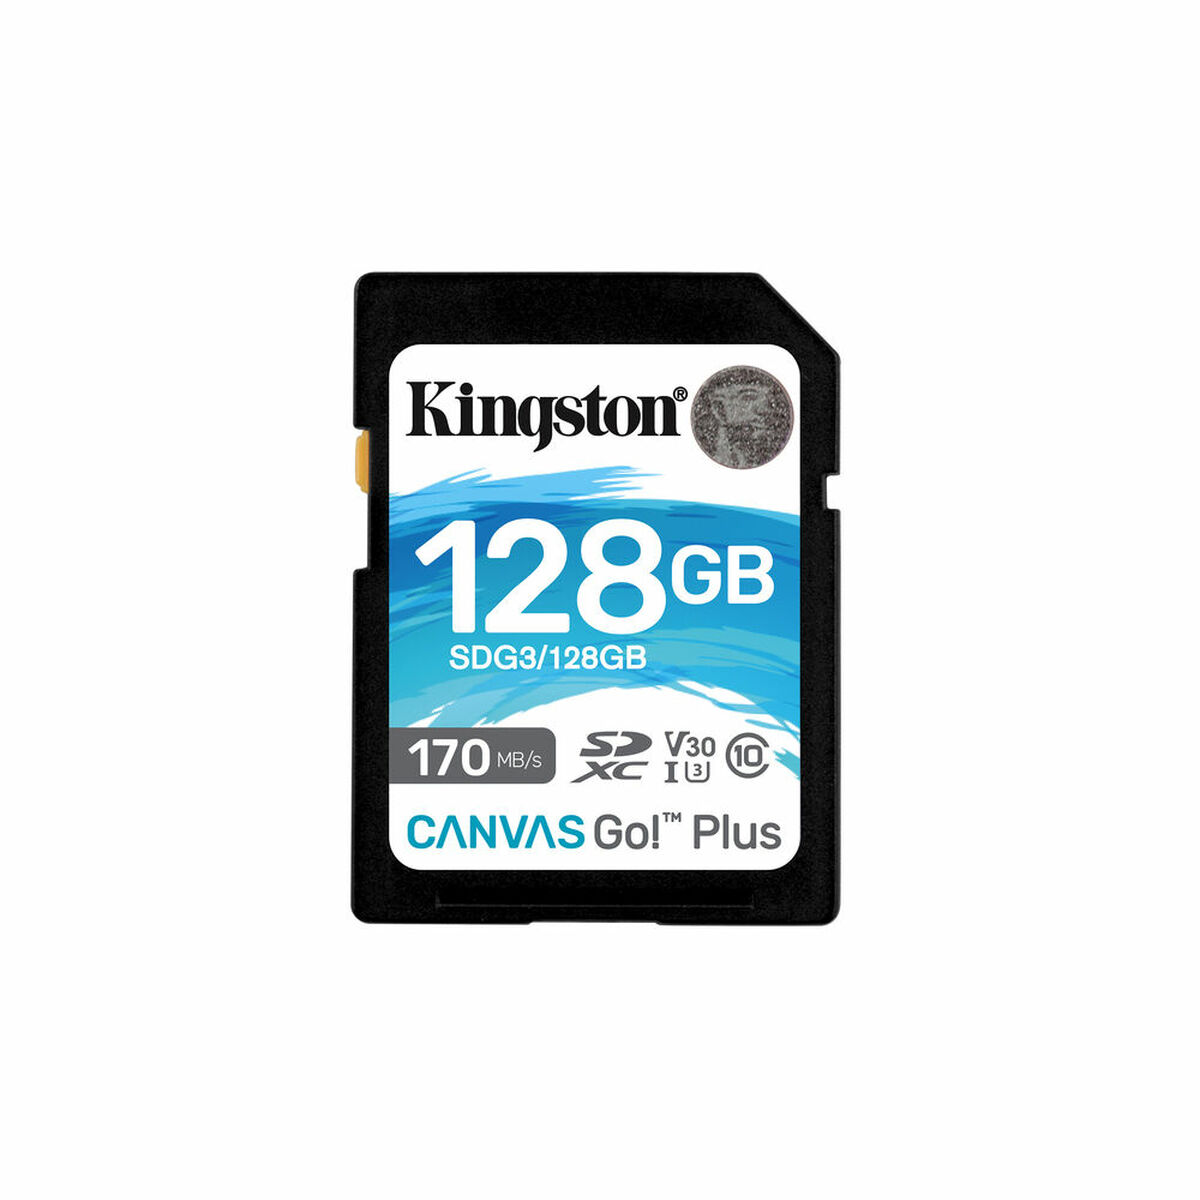 KINGSTON Canvas SDXC Speicherkarte, GB, MB/s 128 90 Go